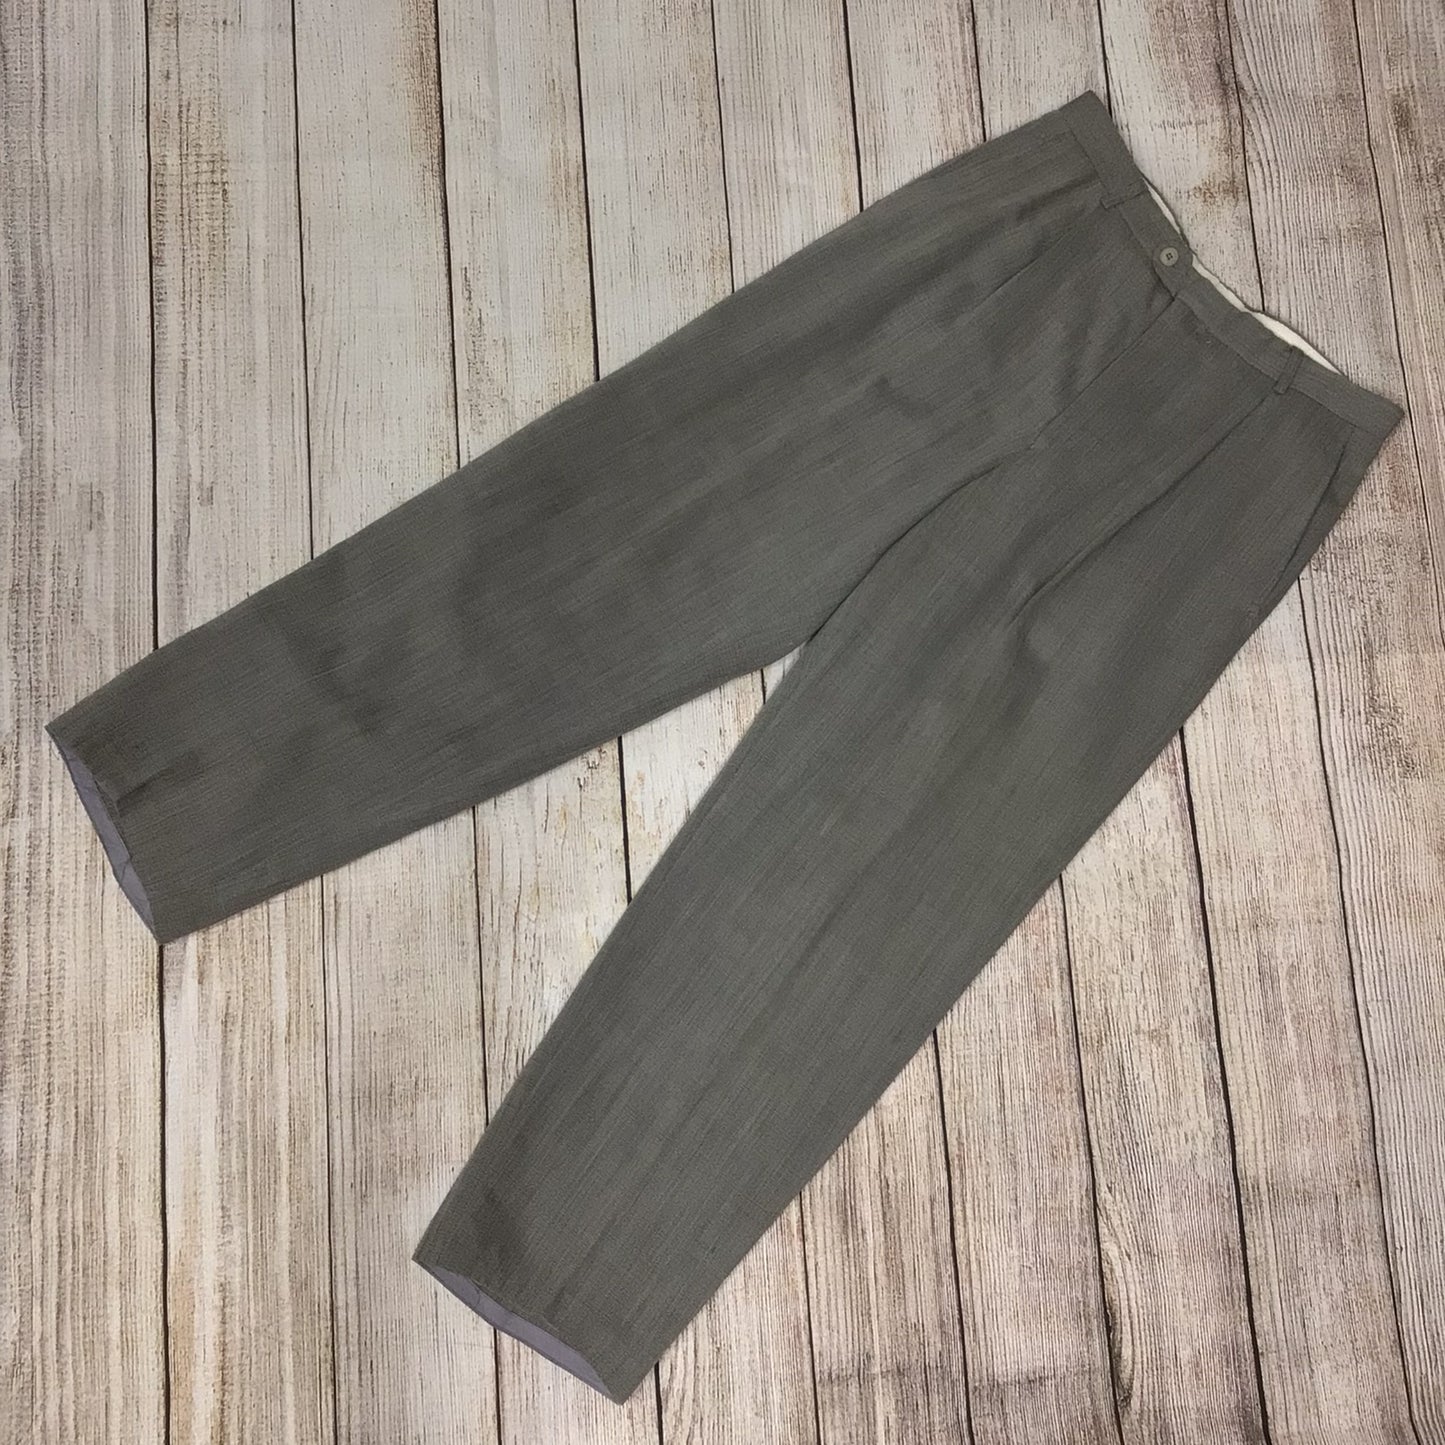 Kenzo Homme Grey Trouser Suit 2 Piece 100% Wool Size 50